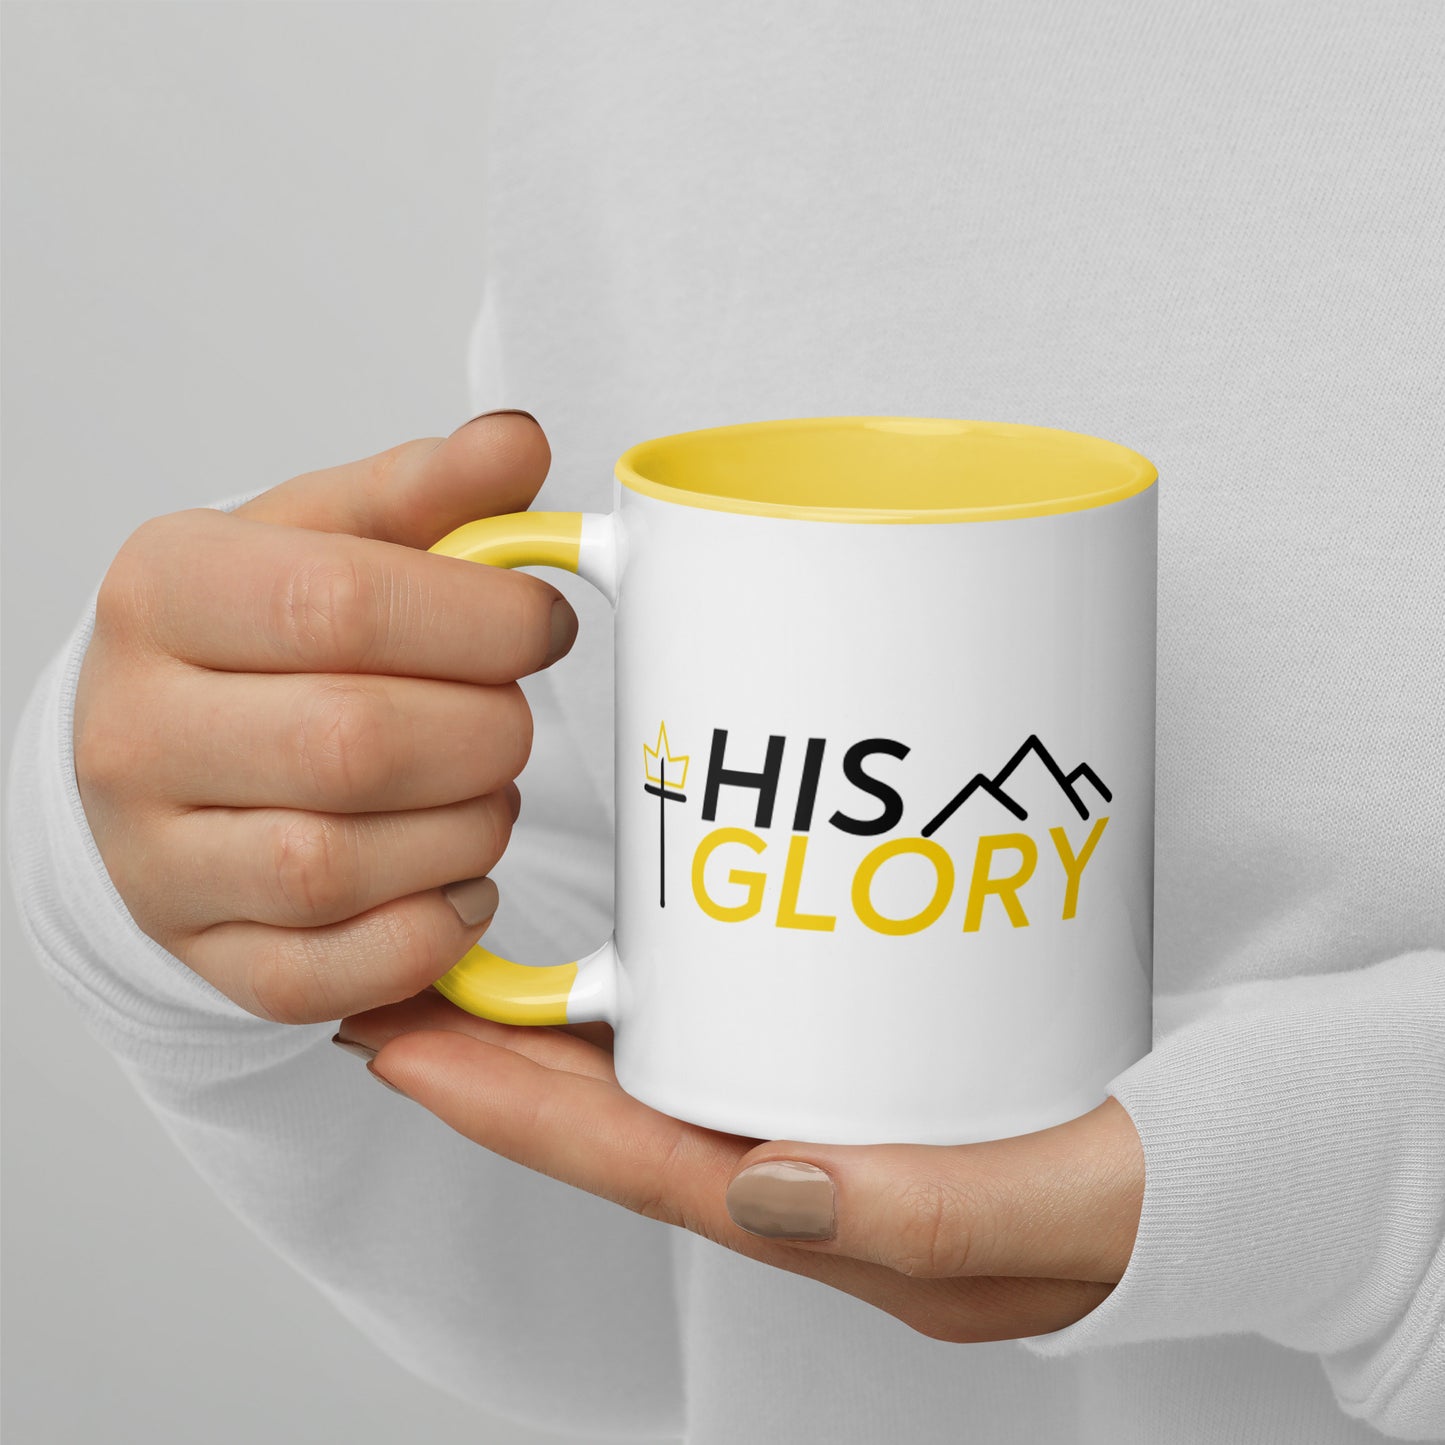 His Glory 3.0 - NEW - Mug with Color Inside